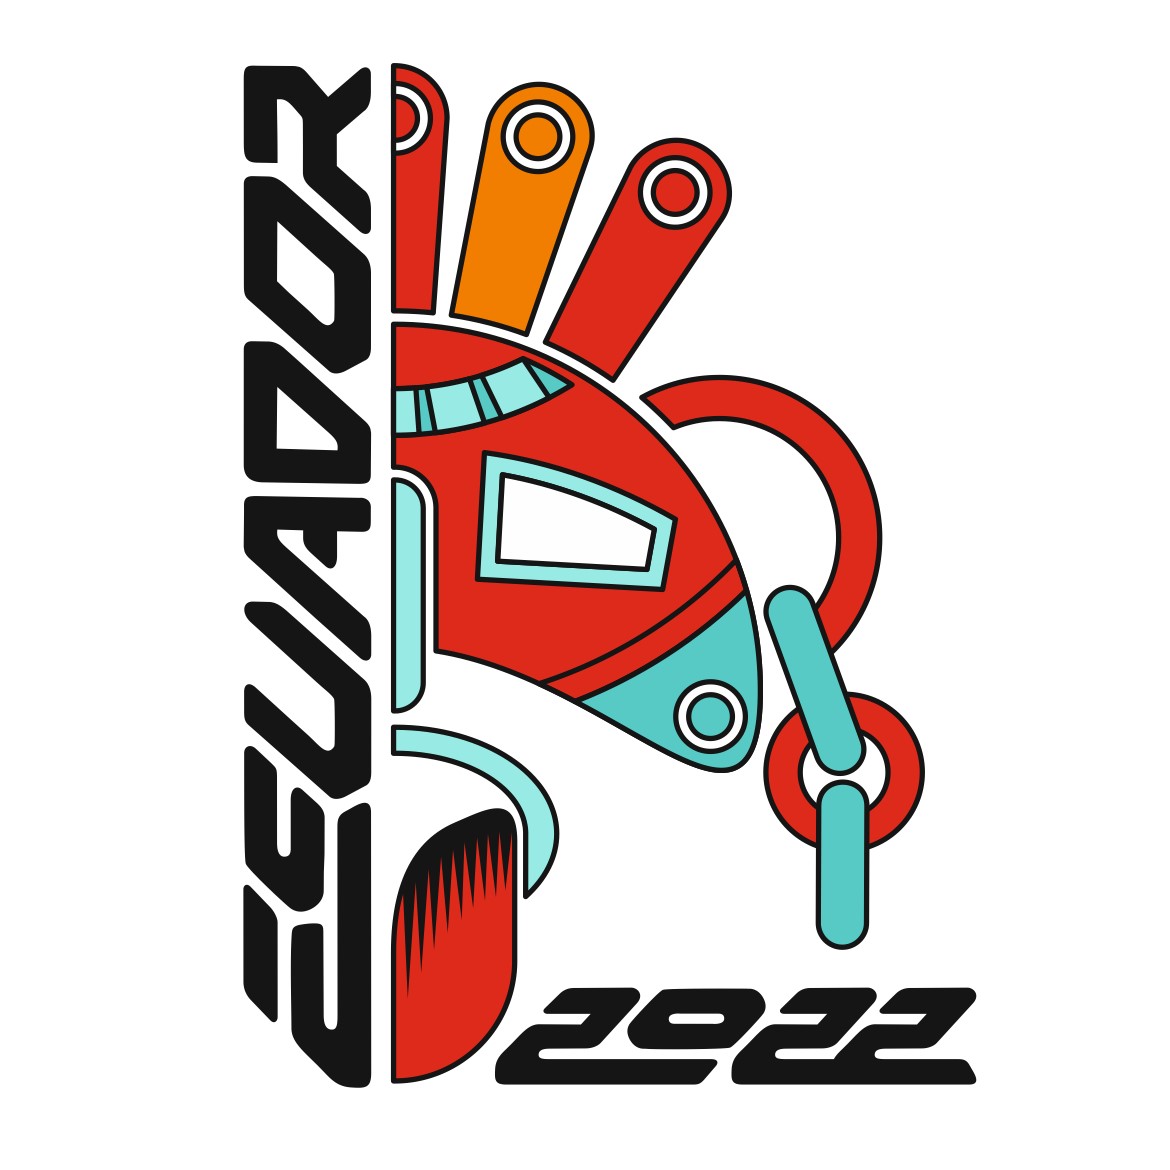 Ecuador_2022 logo design by logo designer Kovalen.com for your inspiration and for the worlds largest logo competition